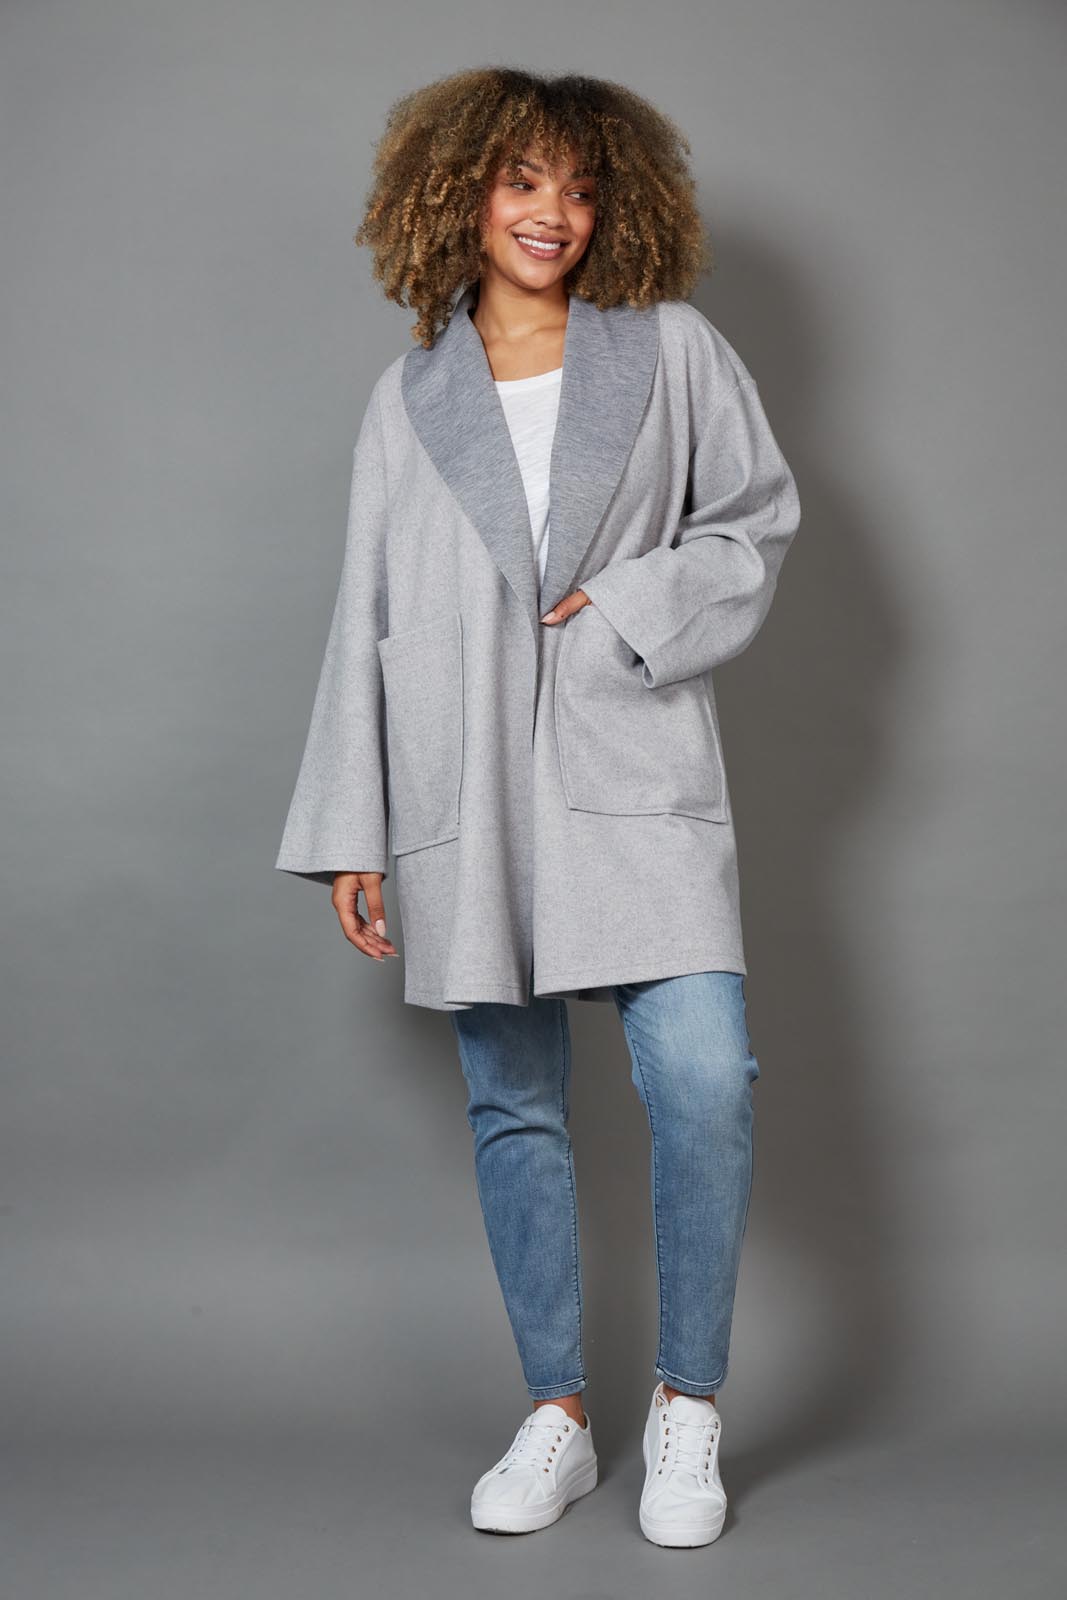 Klein Duster Coat - Gray - eb&ive Clothing - Jacket